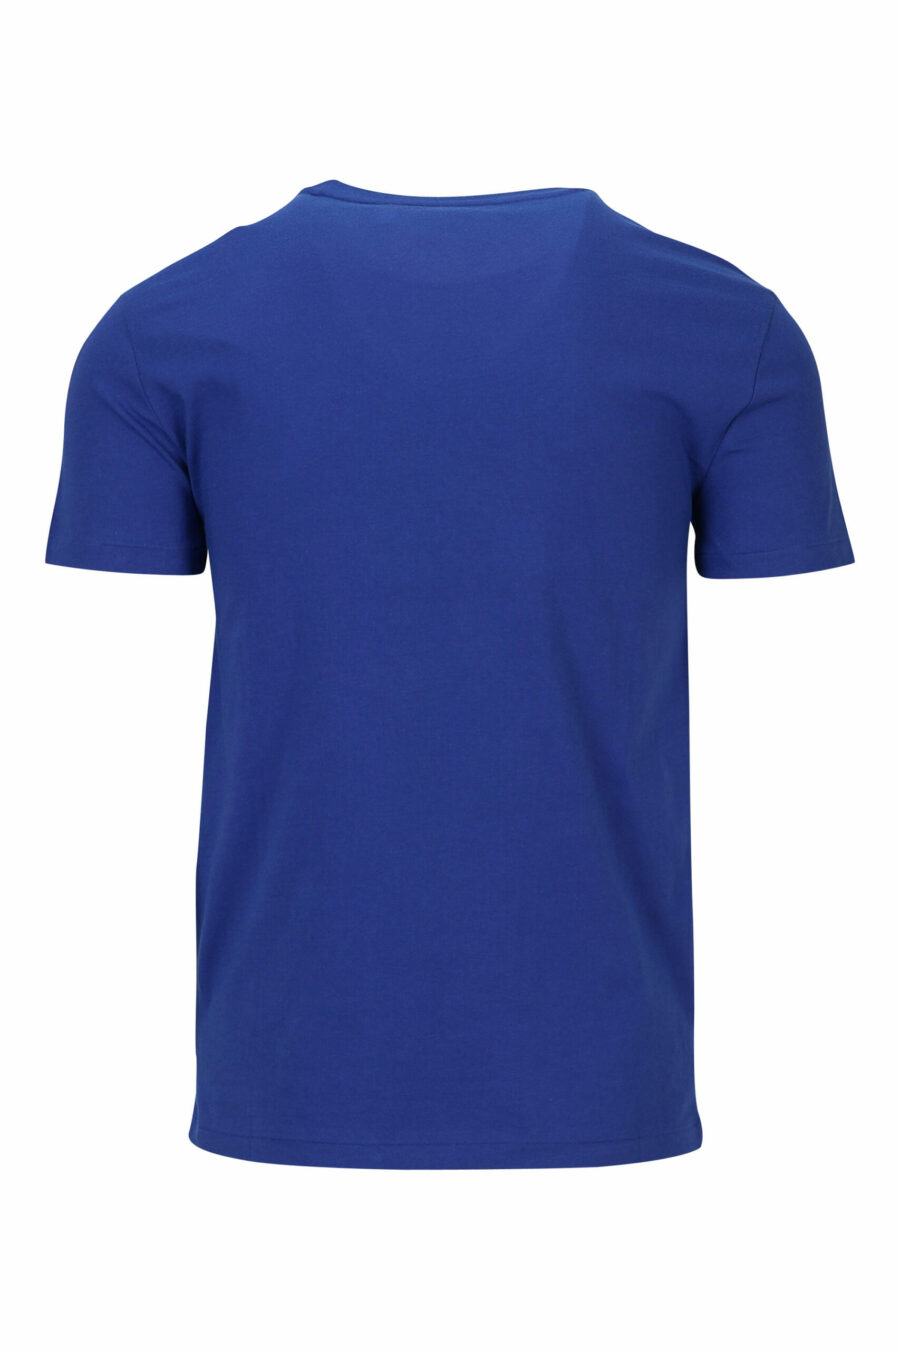 T-shirt bleu avec mini-logo "polo" - 3616535835214 1 à l'échelle